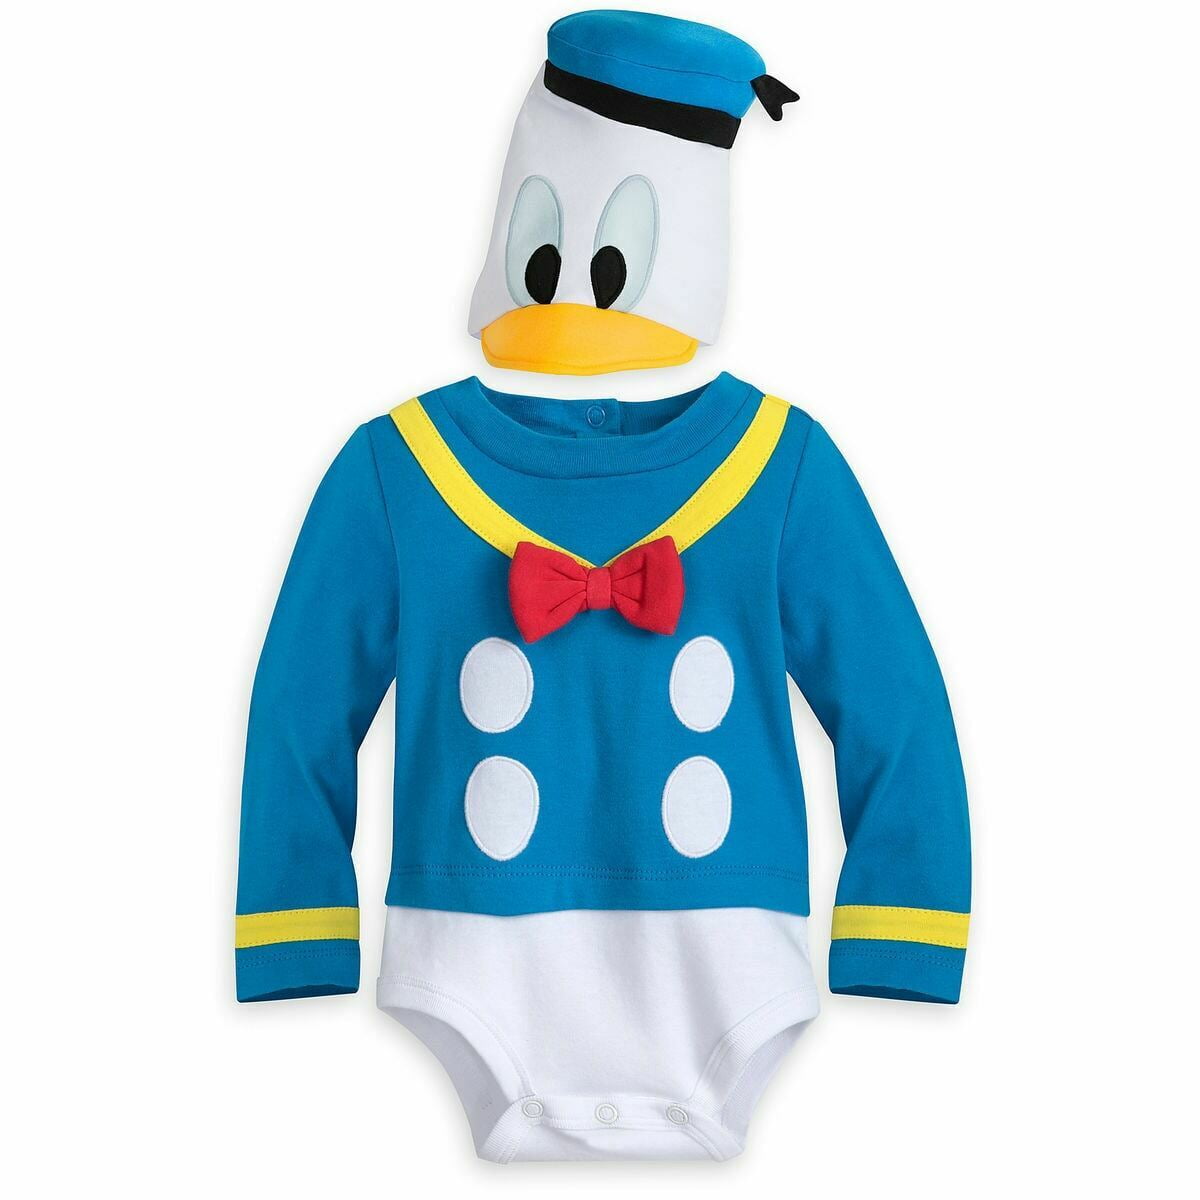 Donald baby dress Donald baby dress costume. 